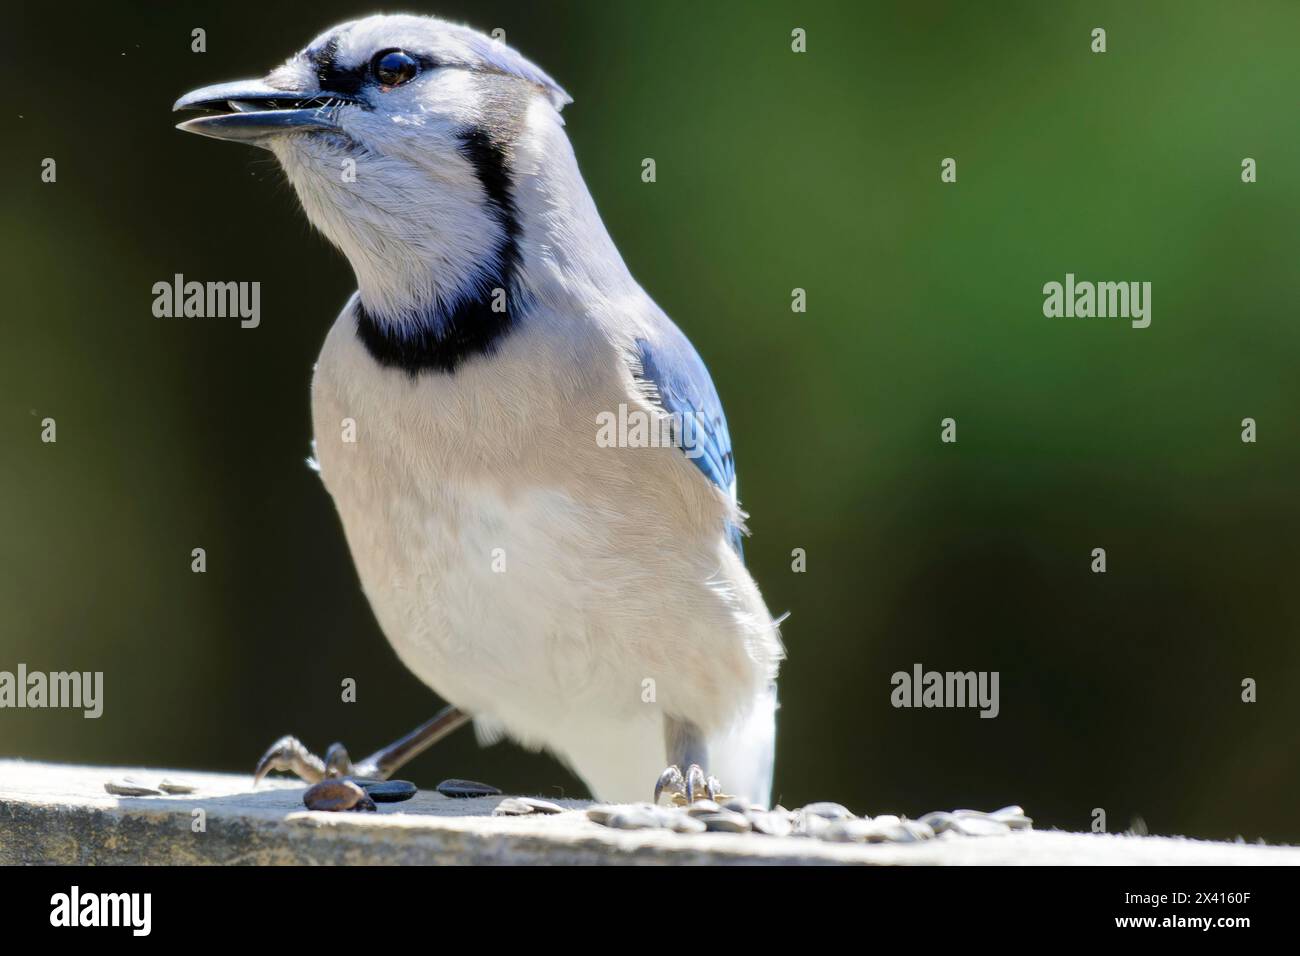 Birds of Pennsylvania, blue jay Stock Photo